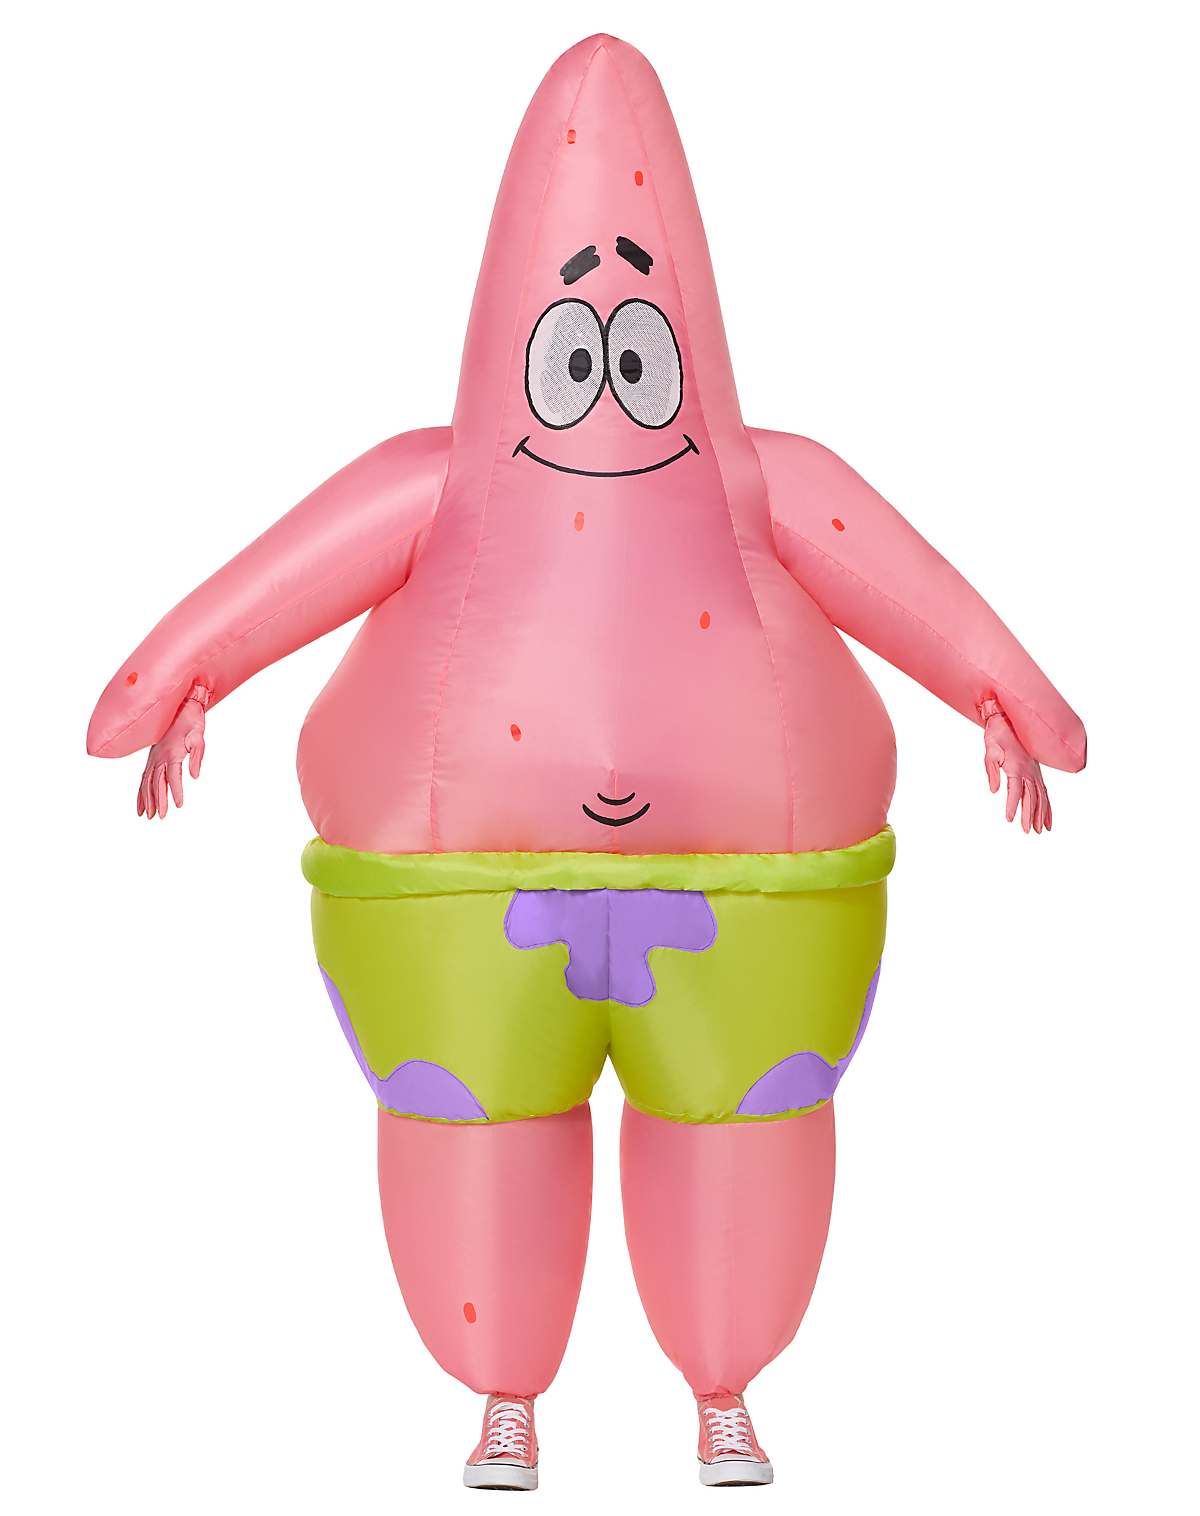 Patrick star costume